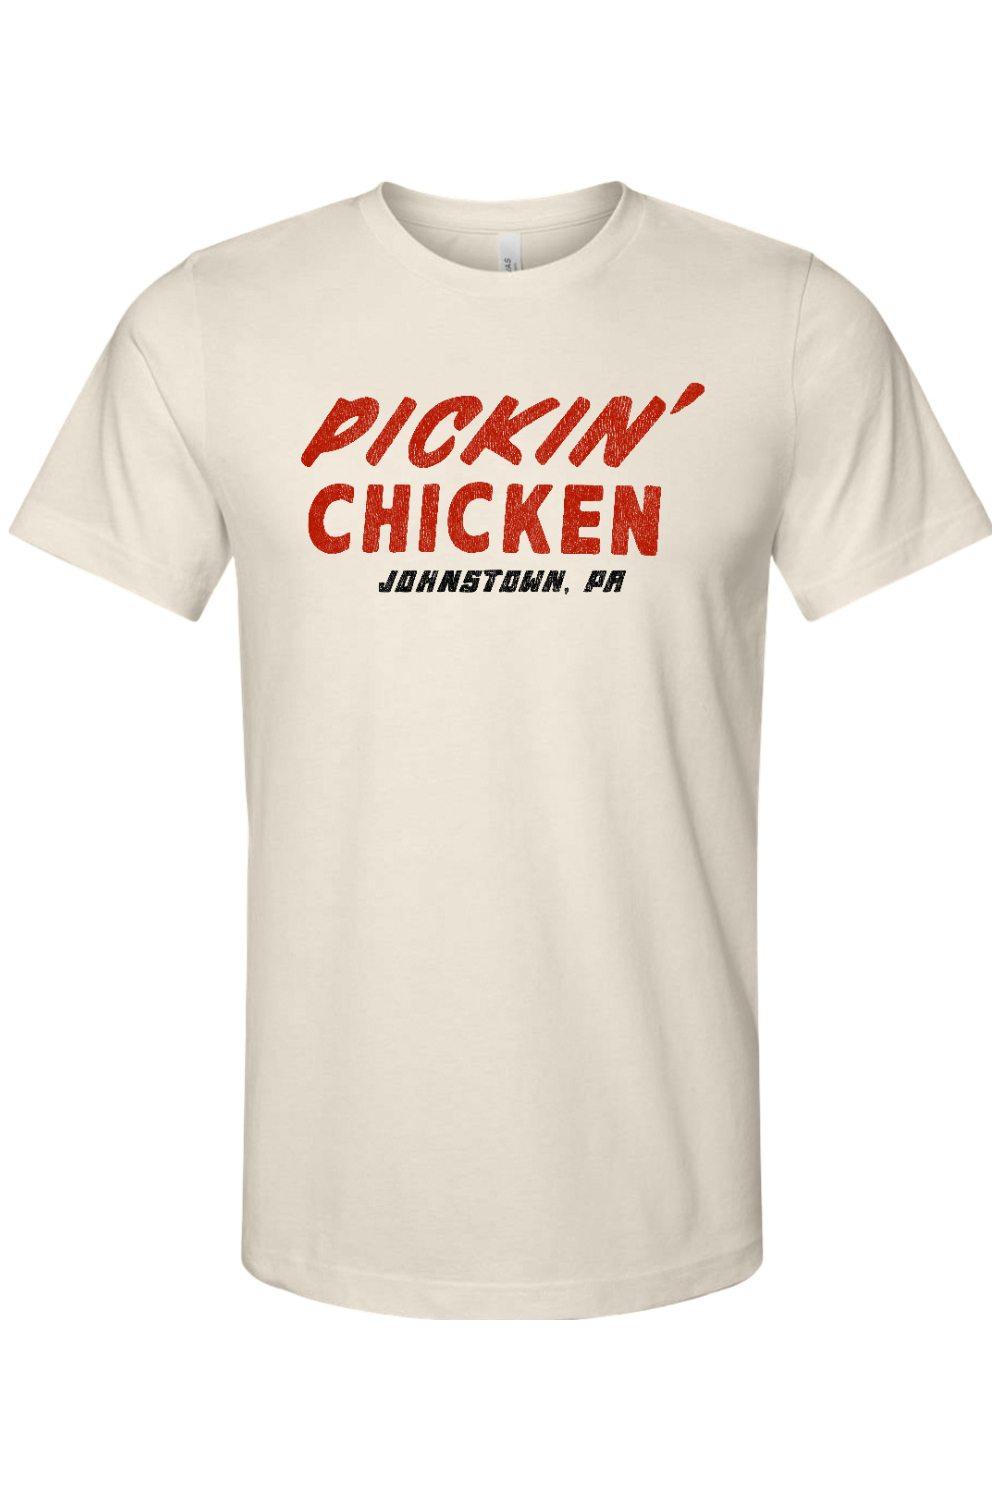 Pickin' Chicken - Johnstown, PA - Yinzylvania